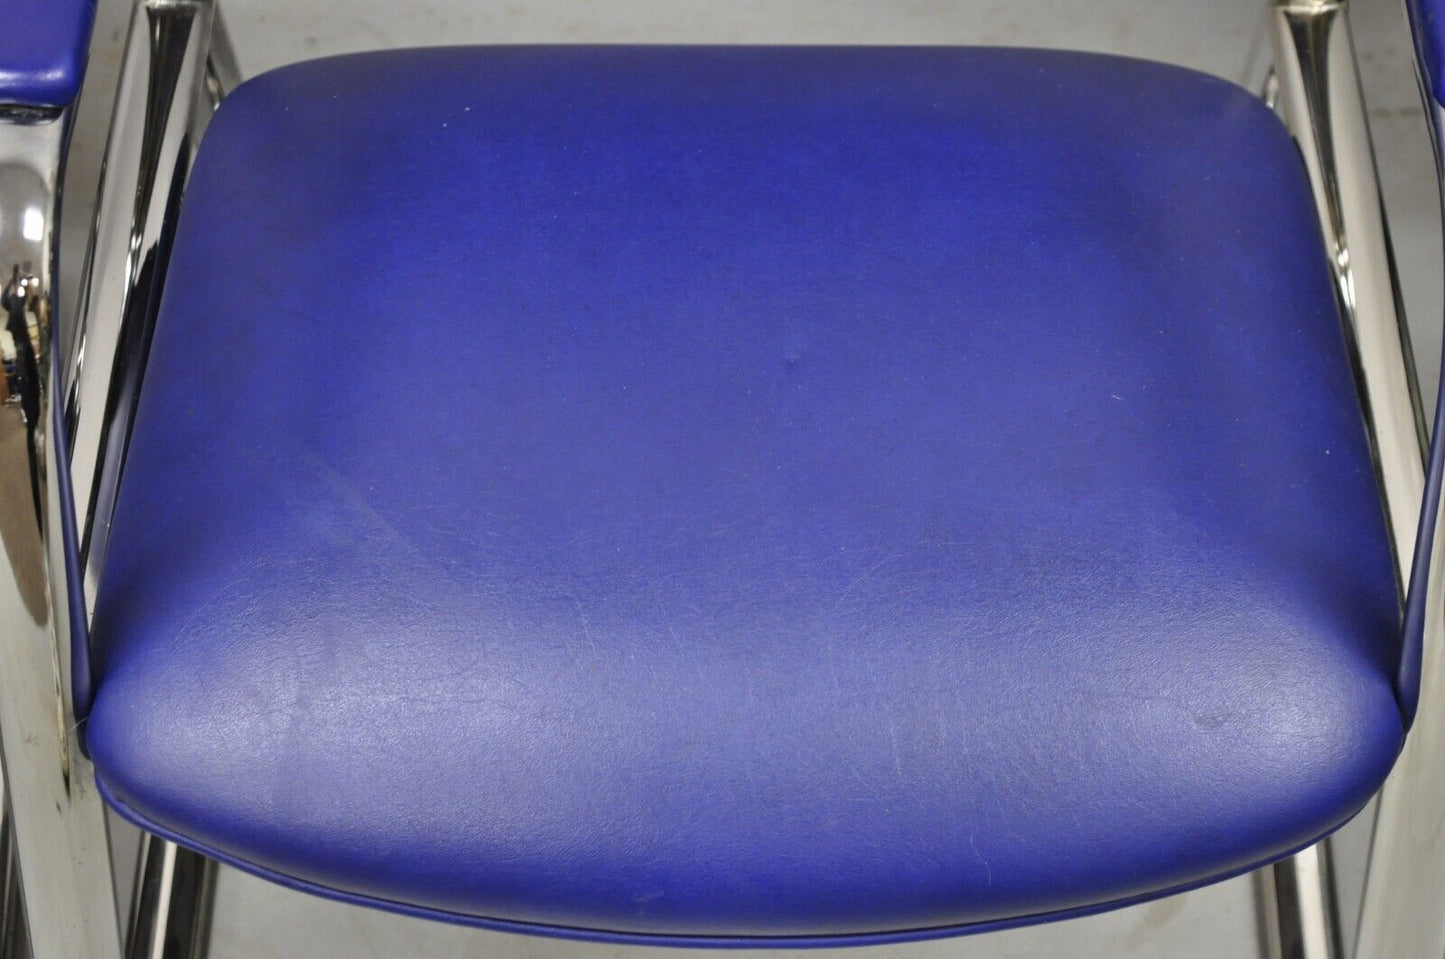 Vintage Lawsonia Stylex Blue Vinyl Chrome Frame Lounge Chairs - a Pair